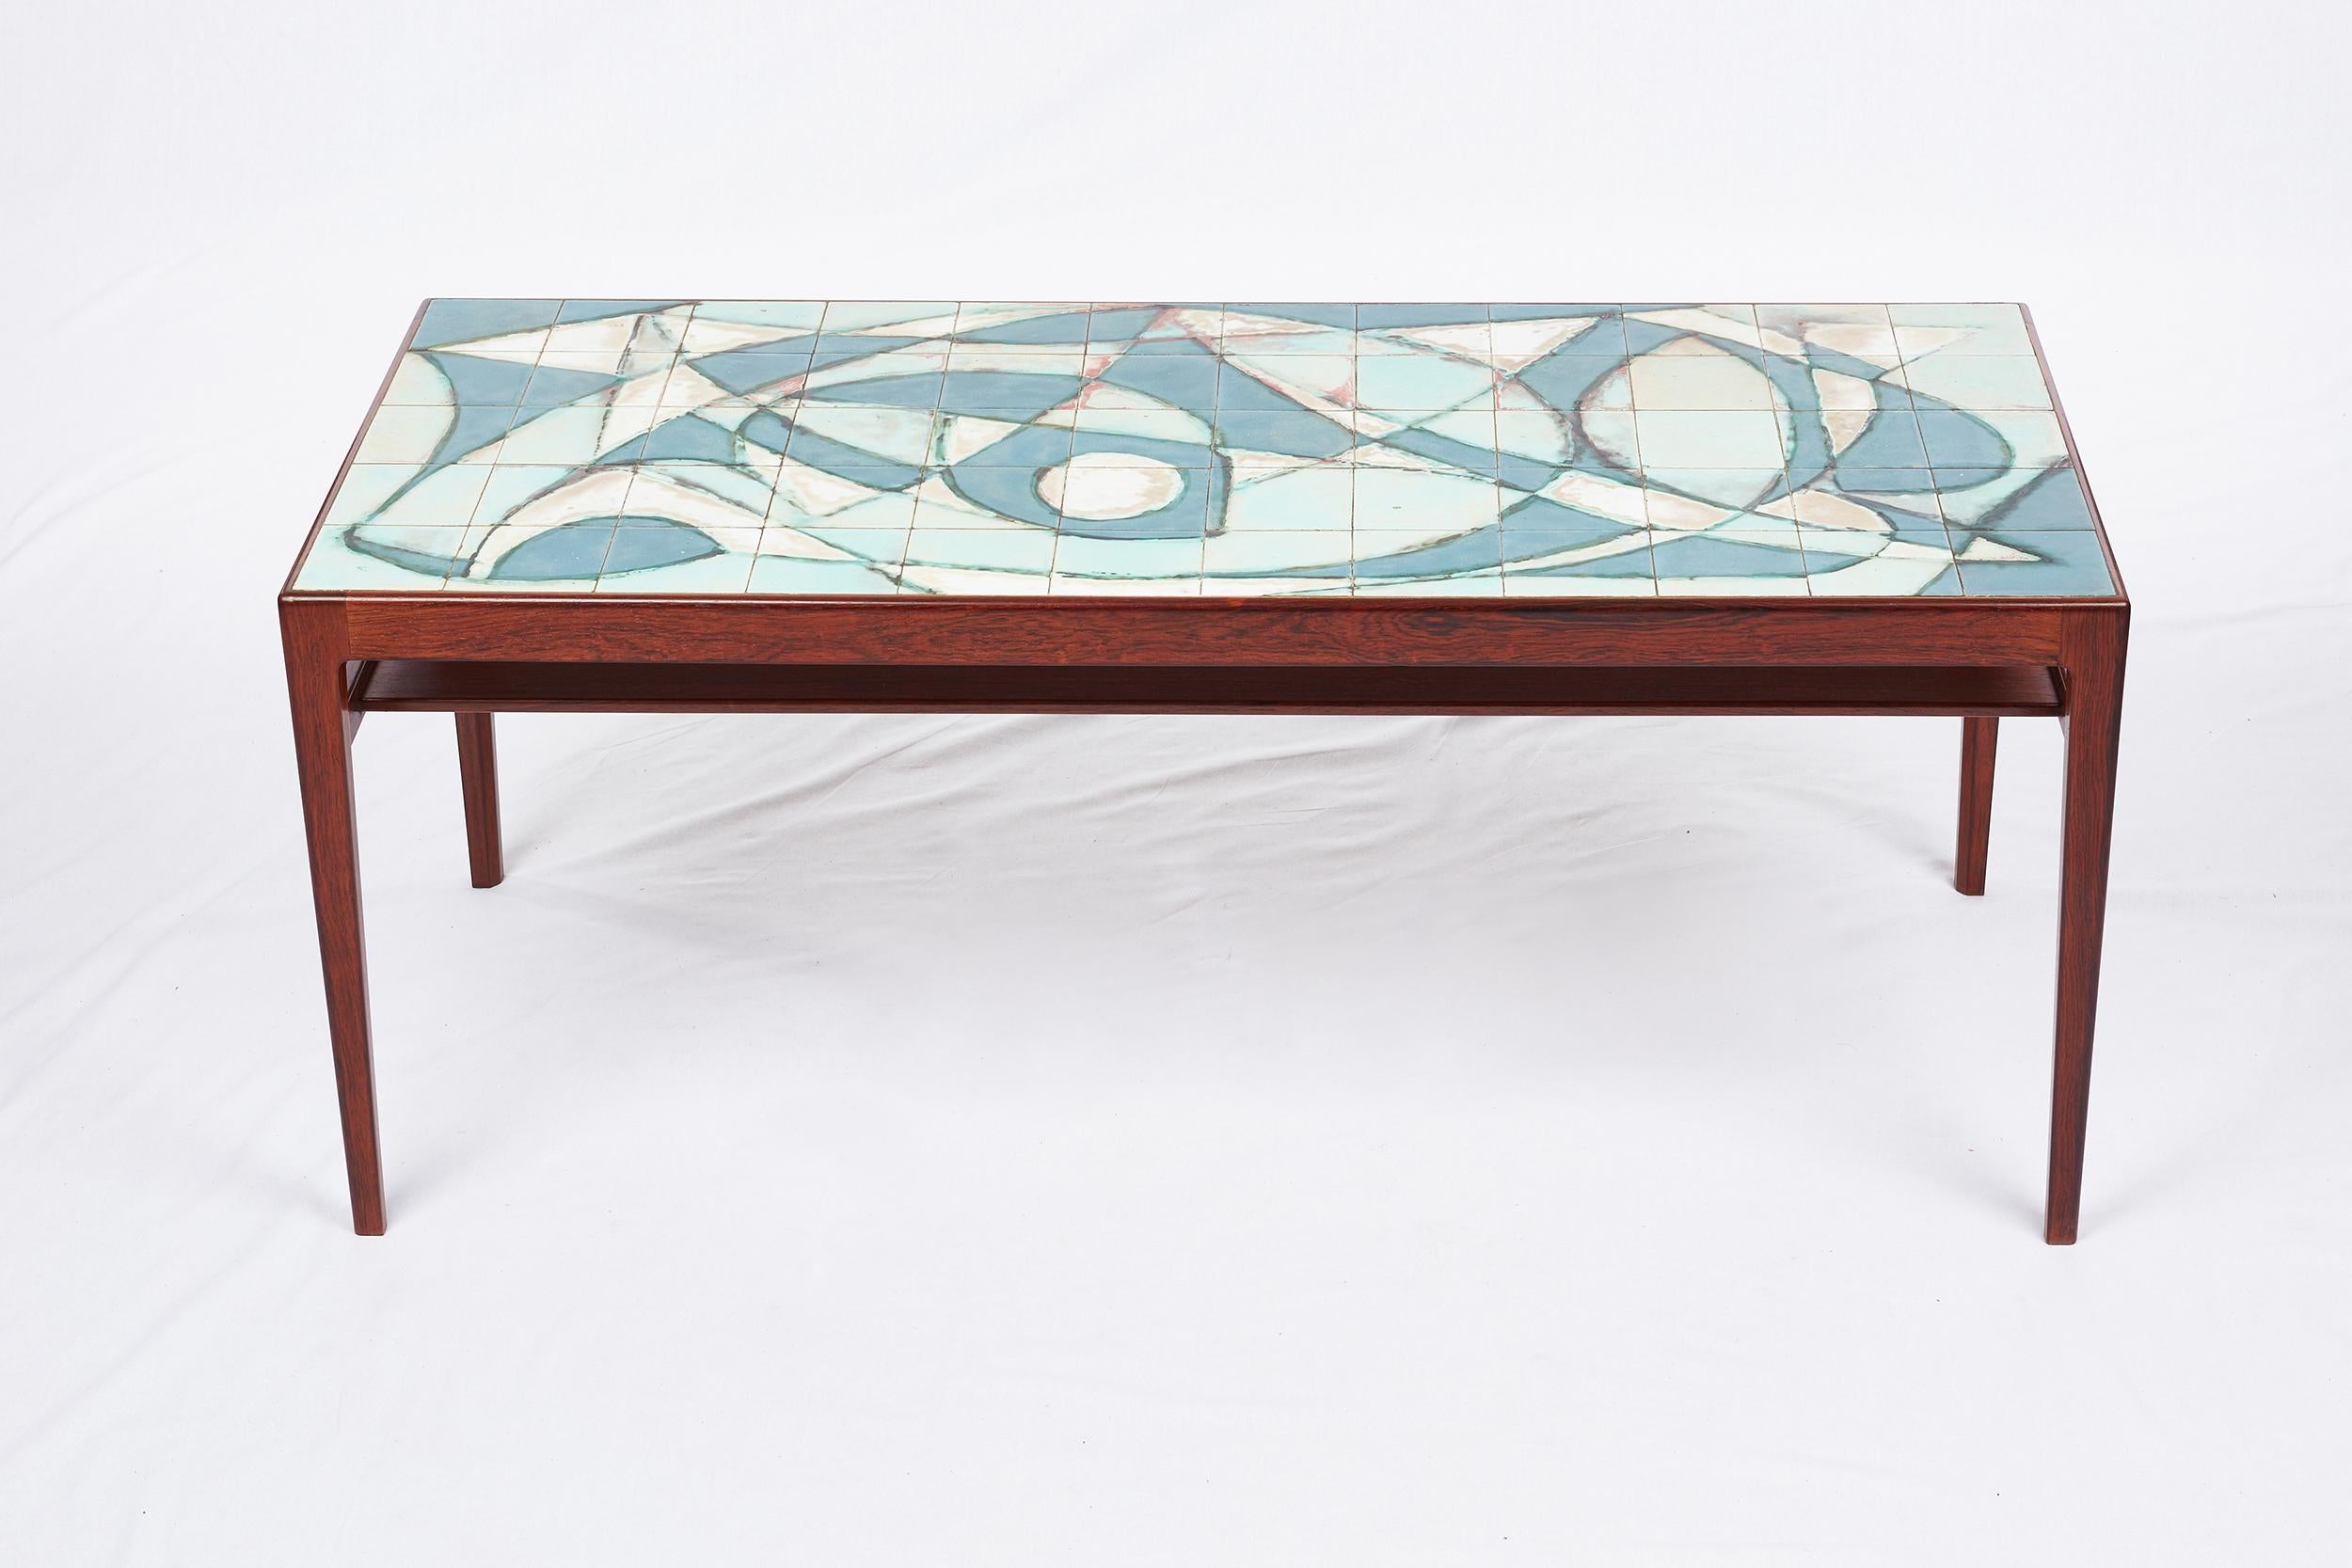 Ejner Larsen & Askel Bender Madsen rosewood tile coffee table. Fabulous abstract work of art. Designed in 1955. Produced by Ludvig Pontoppidan.